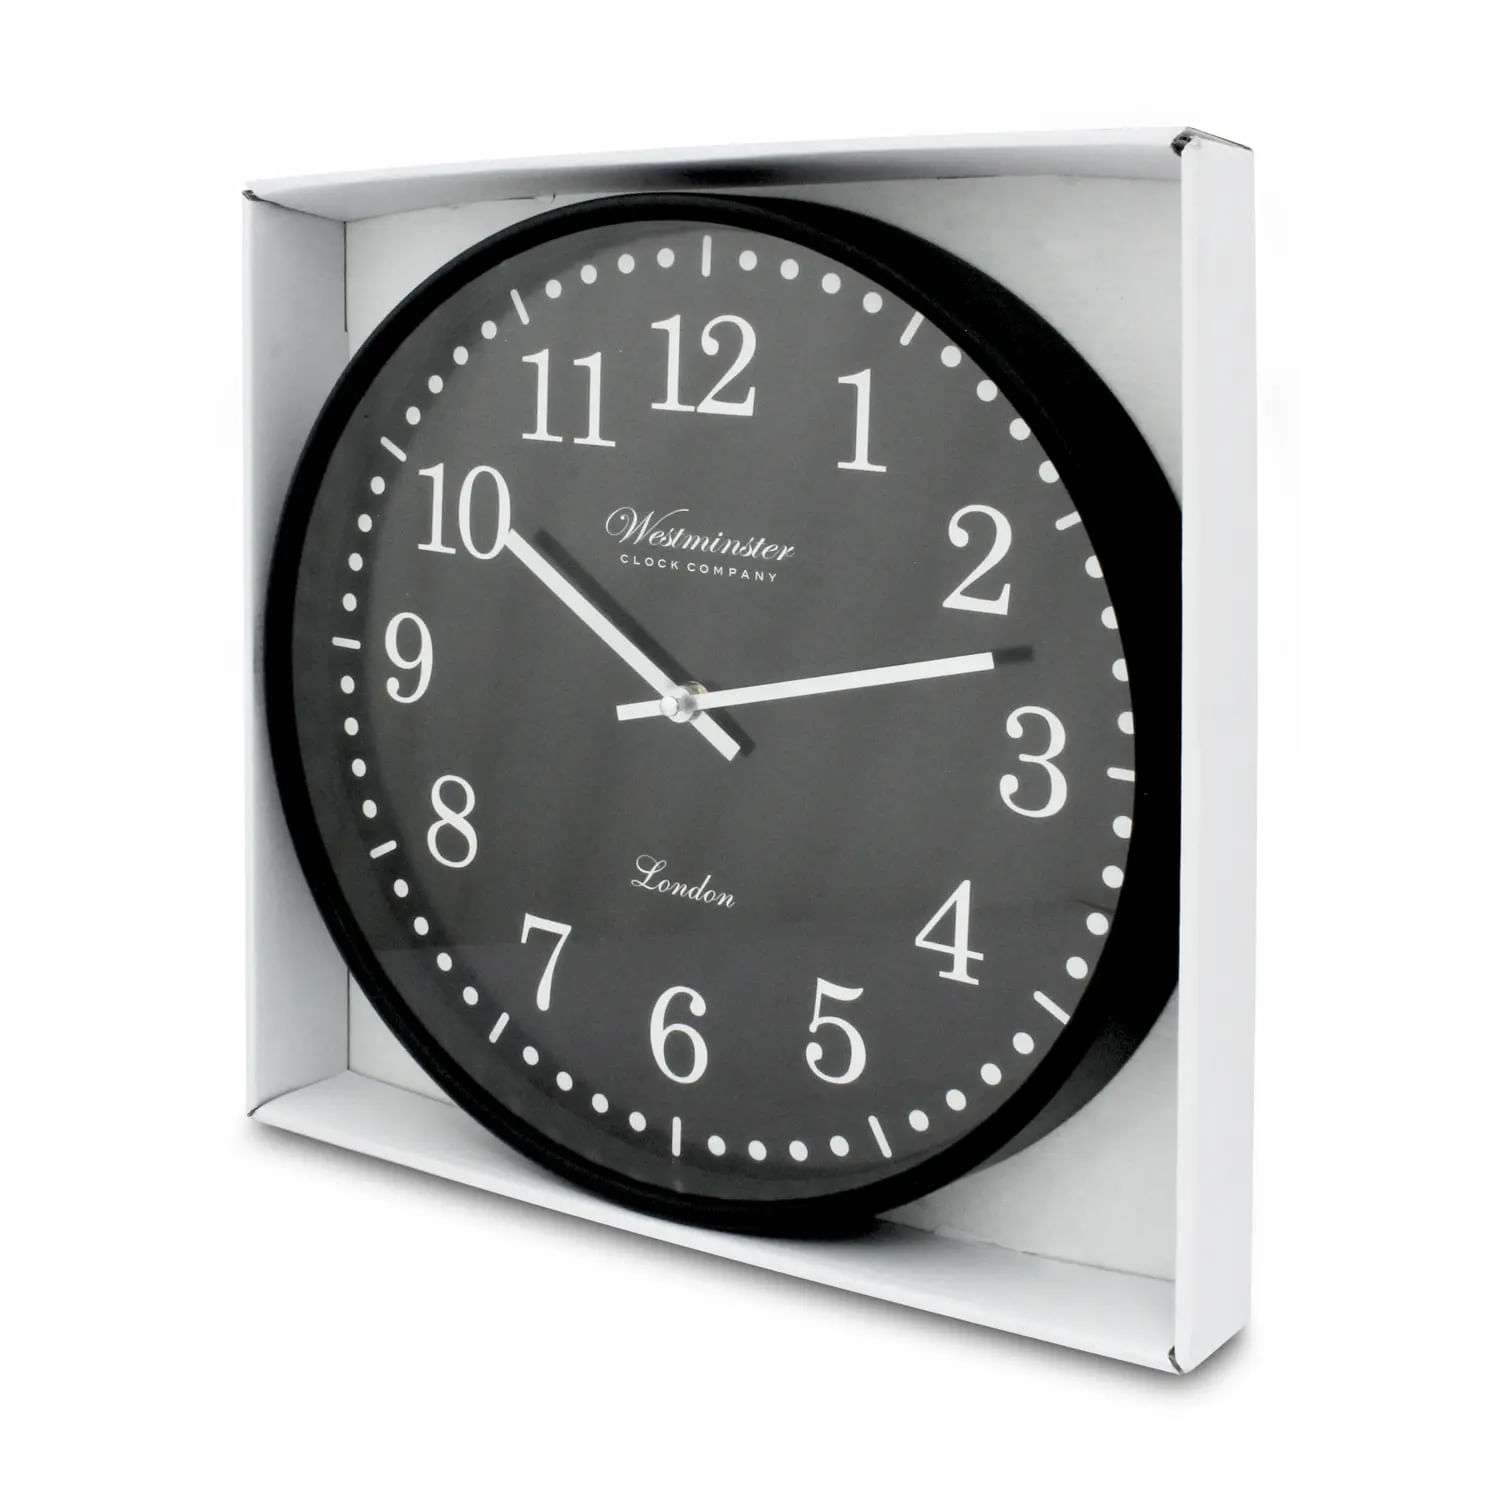  Sky-Town Reloj de pared grande retro country de 14 pulgadas,  diseño moderno, reloj de pared 3D, reloj de pared grande, reloj de pared  vintage, reloj de pared, decoración de reloj de